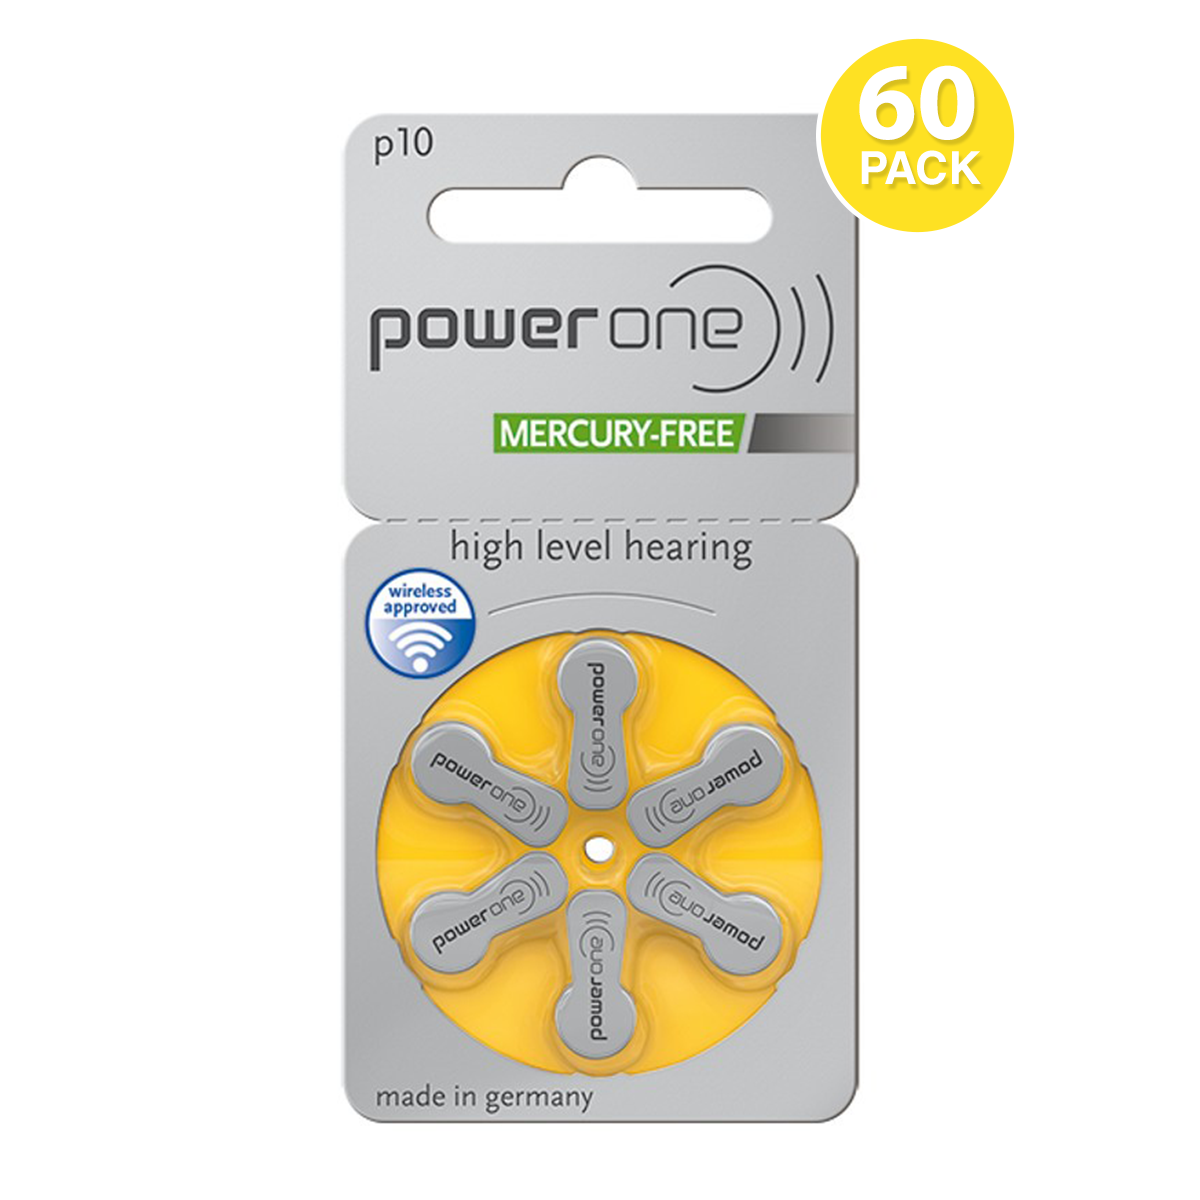 Power One Size P10 Hearing Aid Battery, Mercury-Free (60 pcs.)